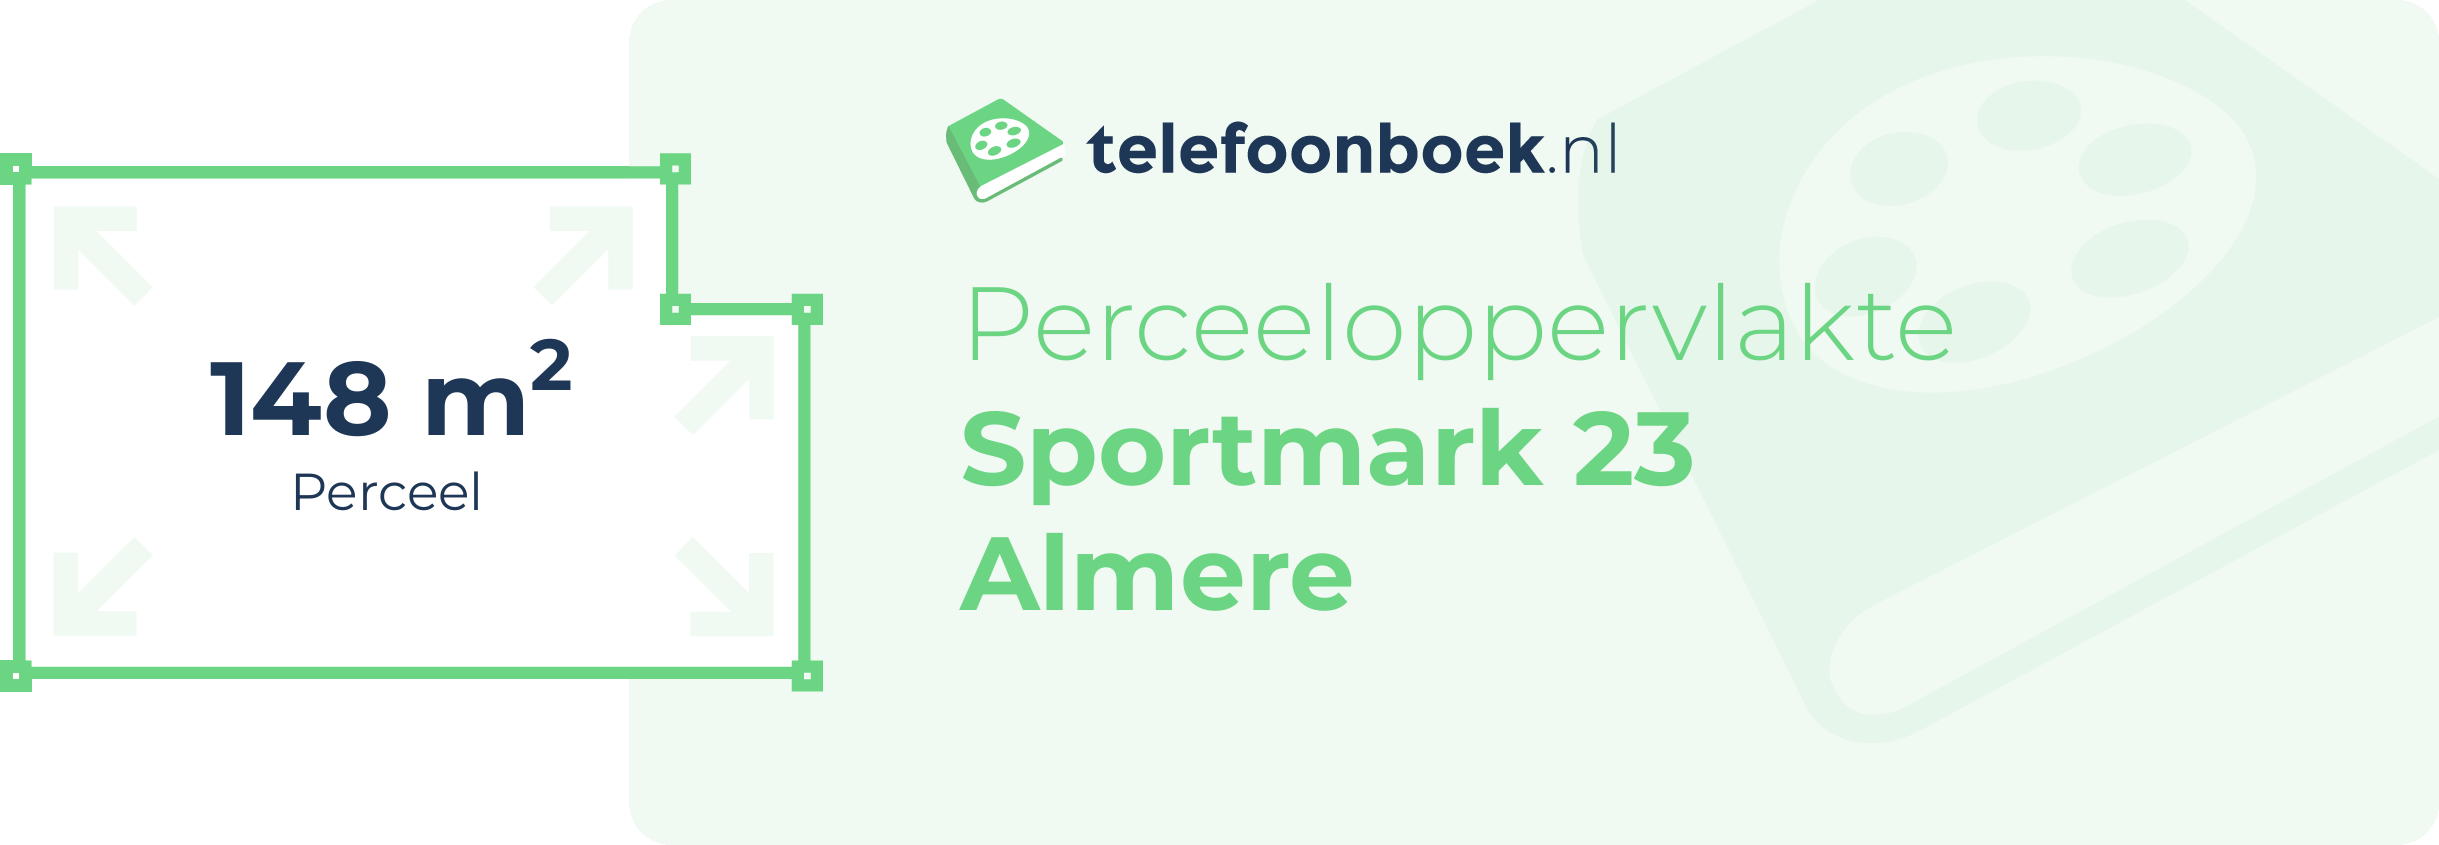 Perceeloppervlakte Sportmark 23 Almere